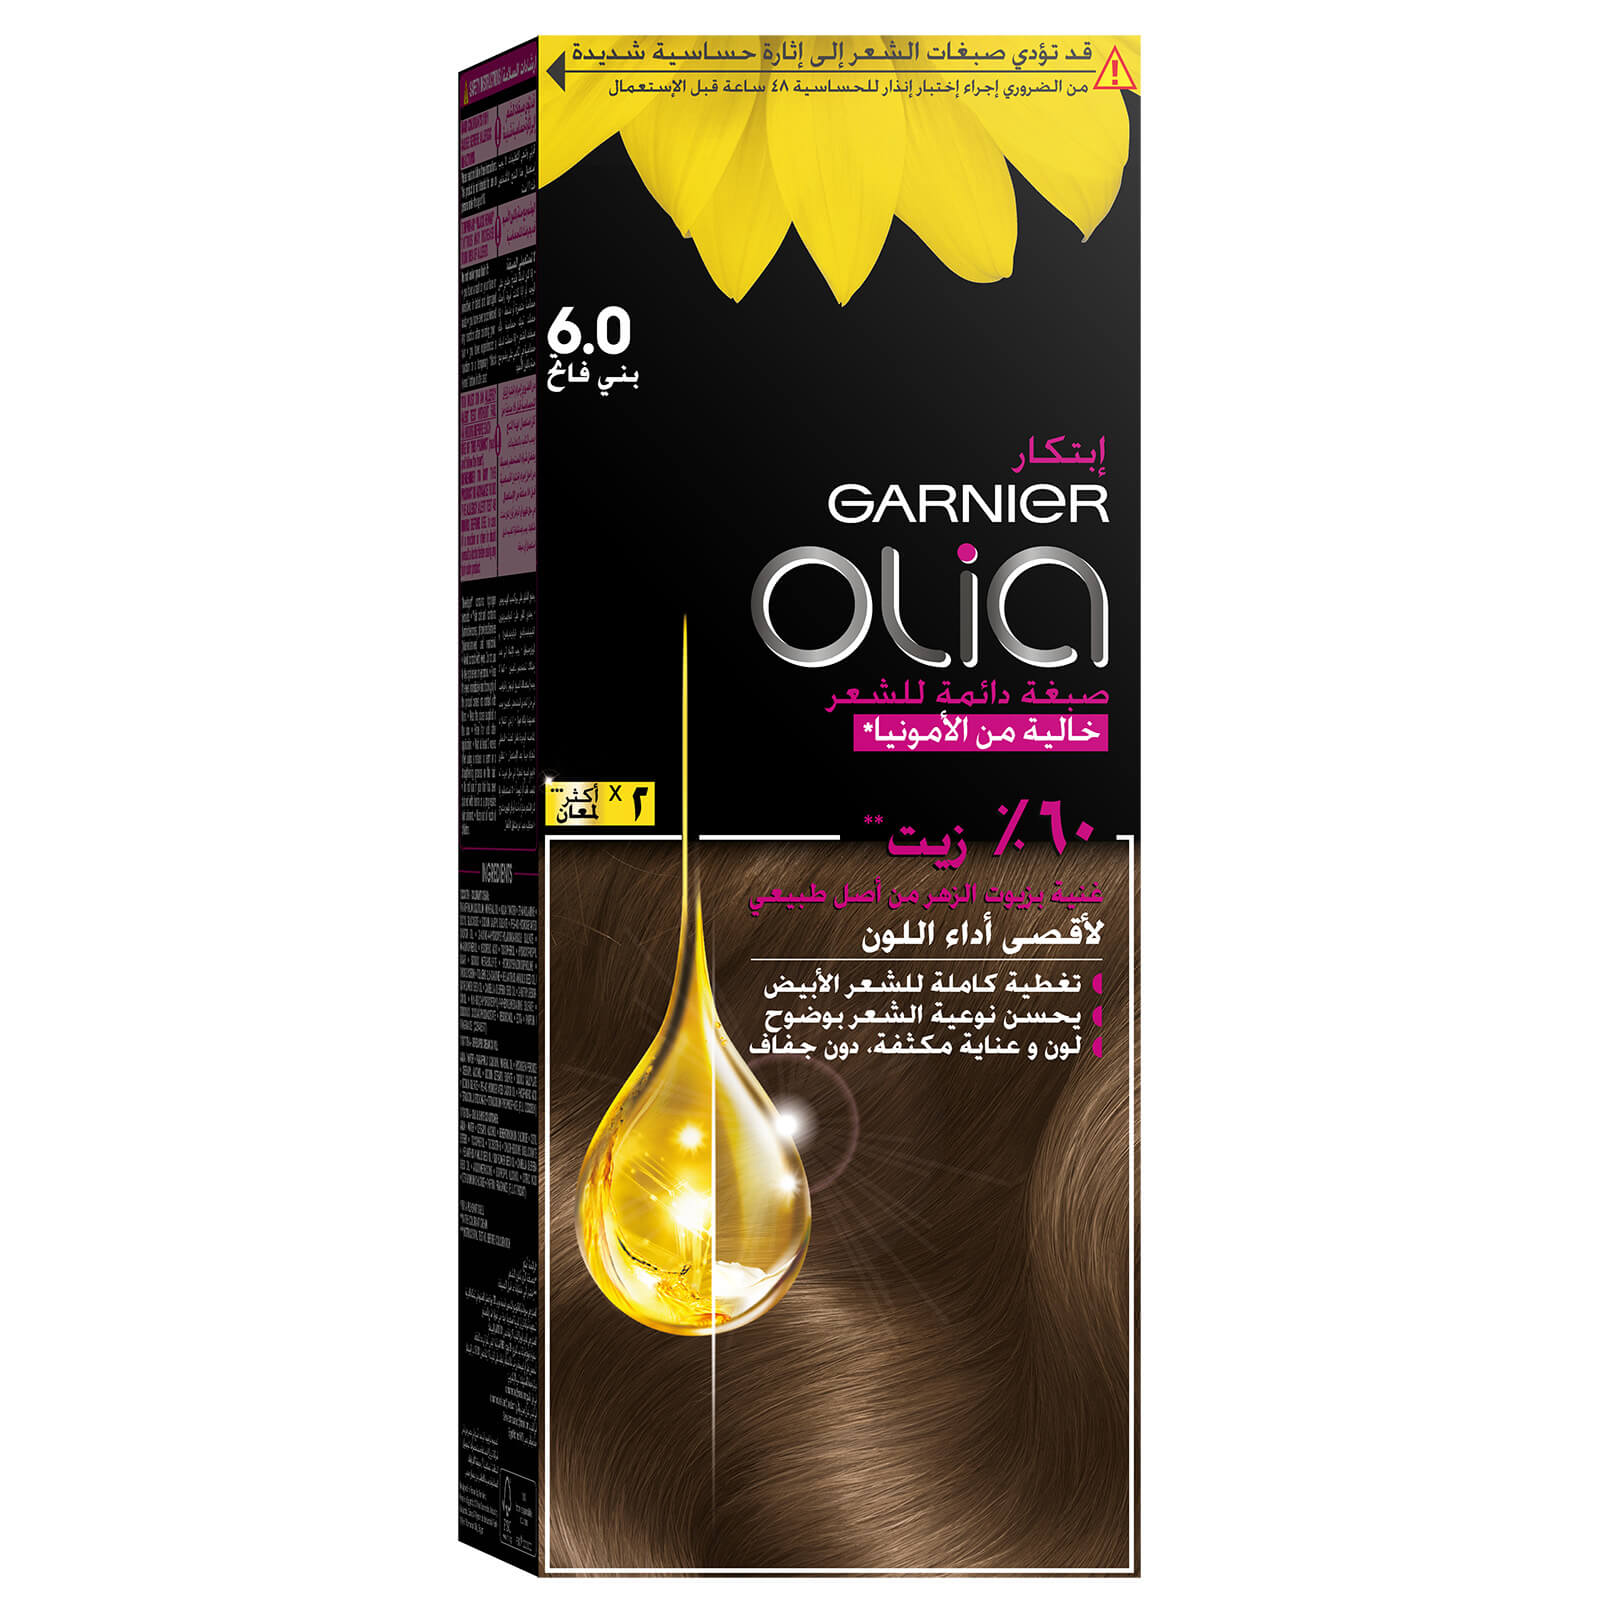 Garnier Olia No Ammonia Permanent Hair Colour 144g (Various Colours) - 6.0 Light Brown